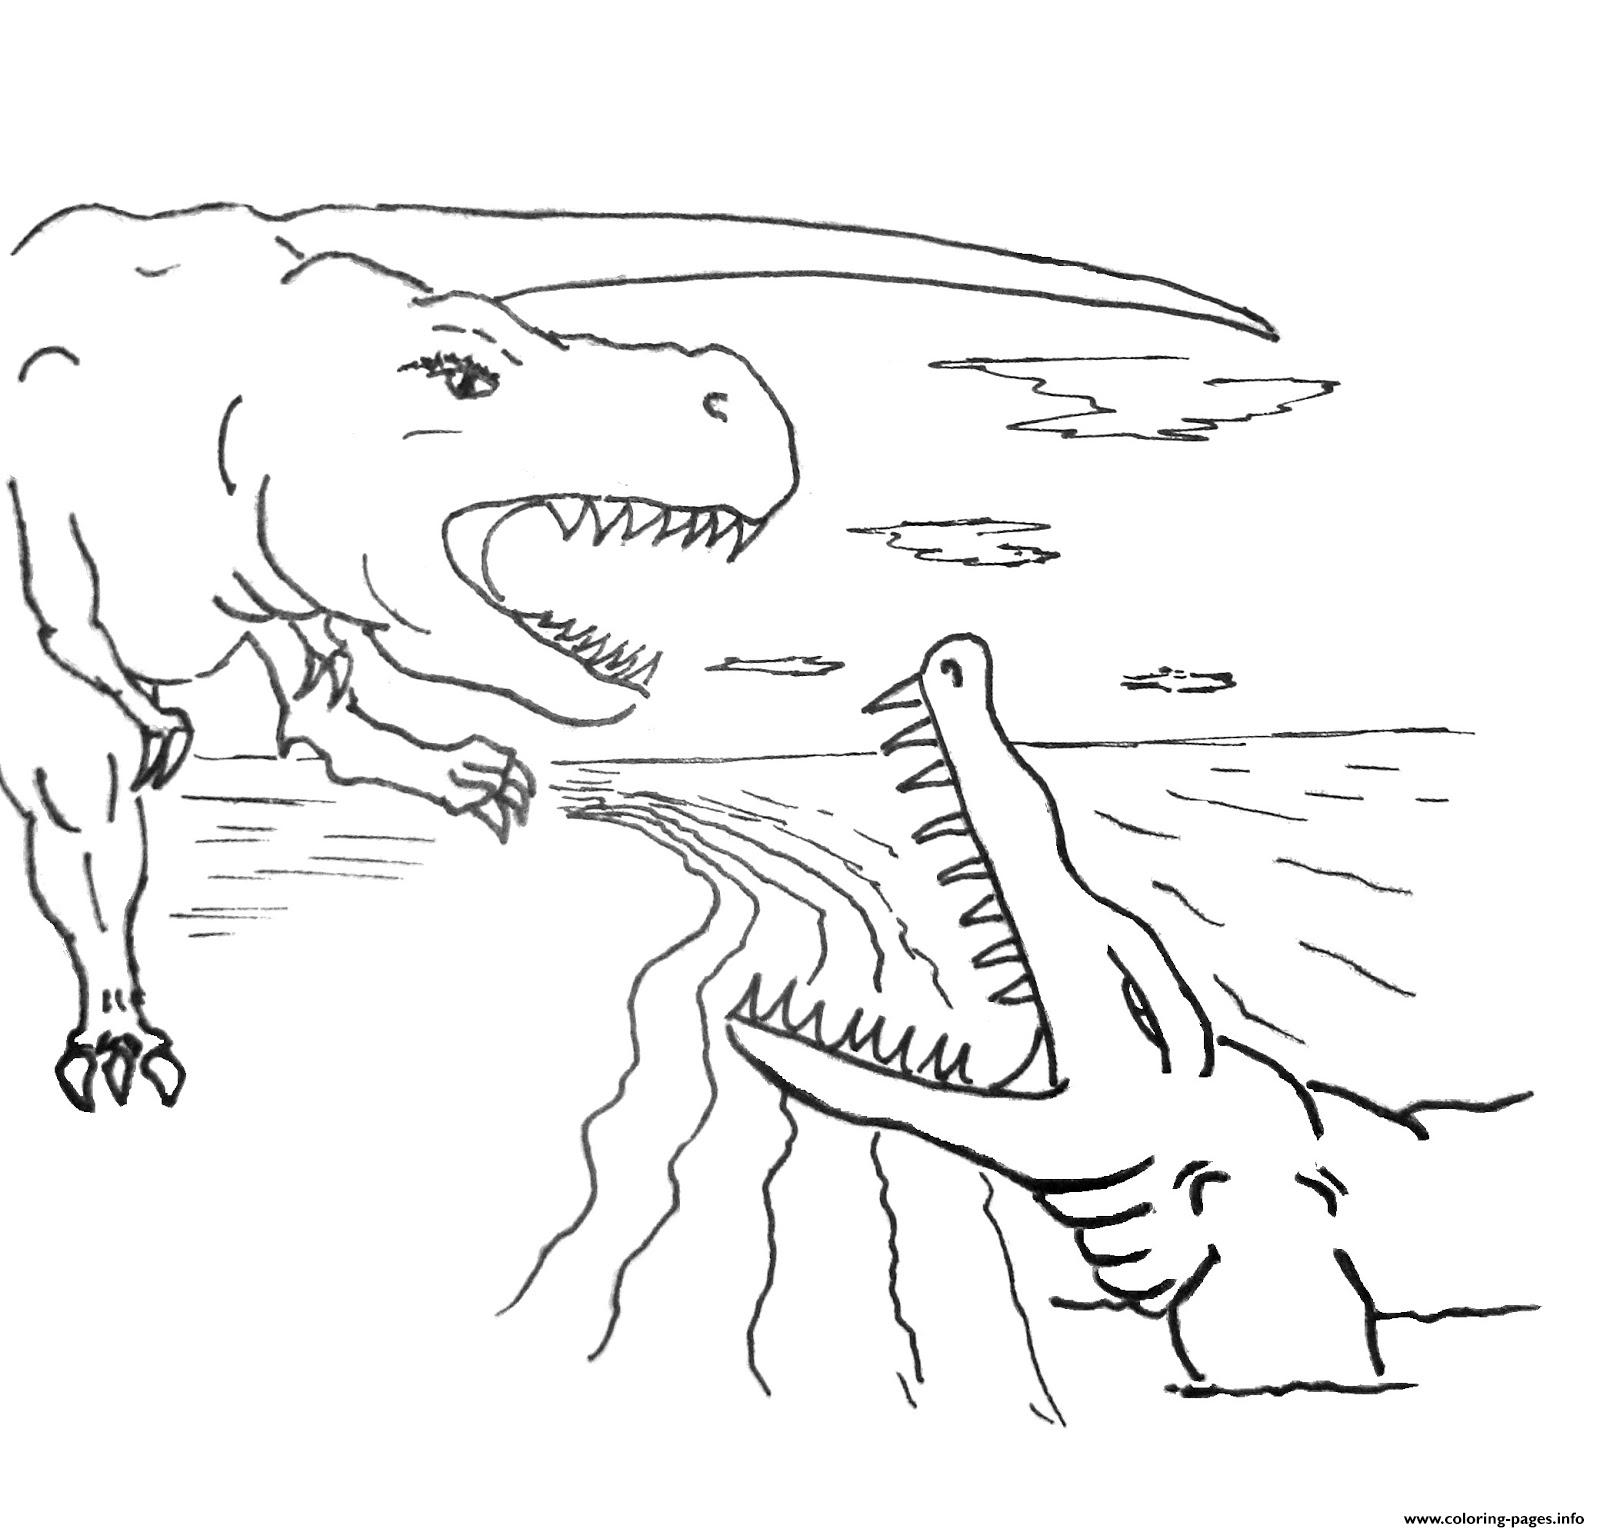 Dinosaur 198 coloring